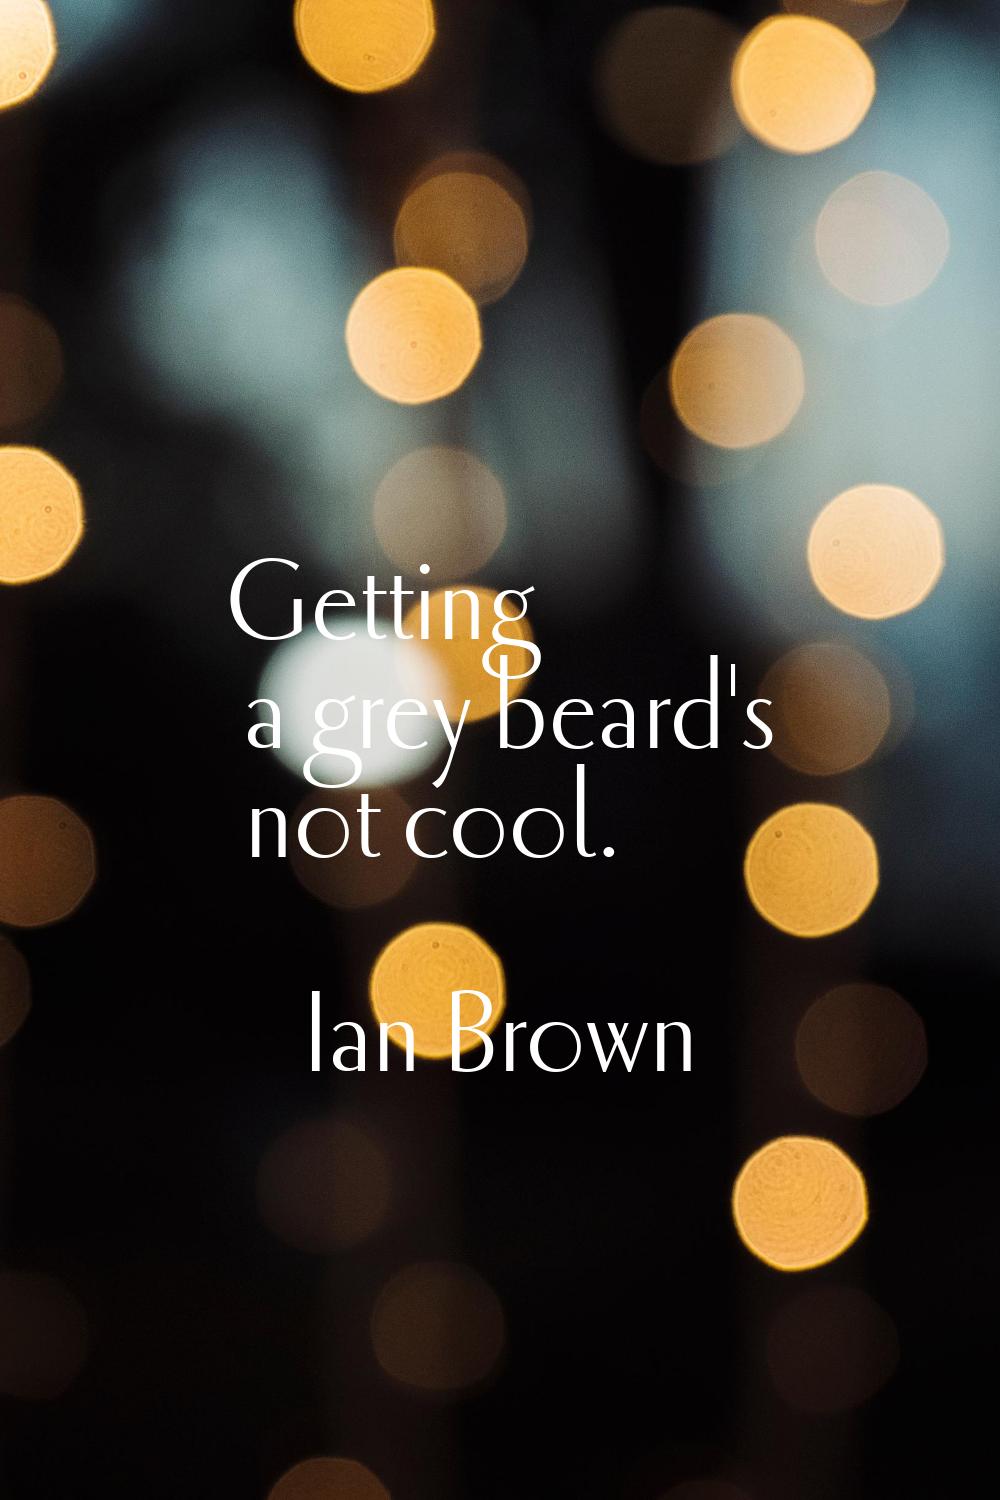 Getting a grey beard's not cool.